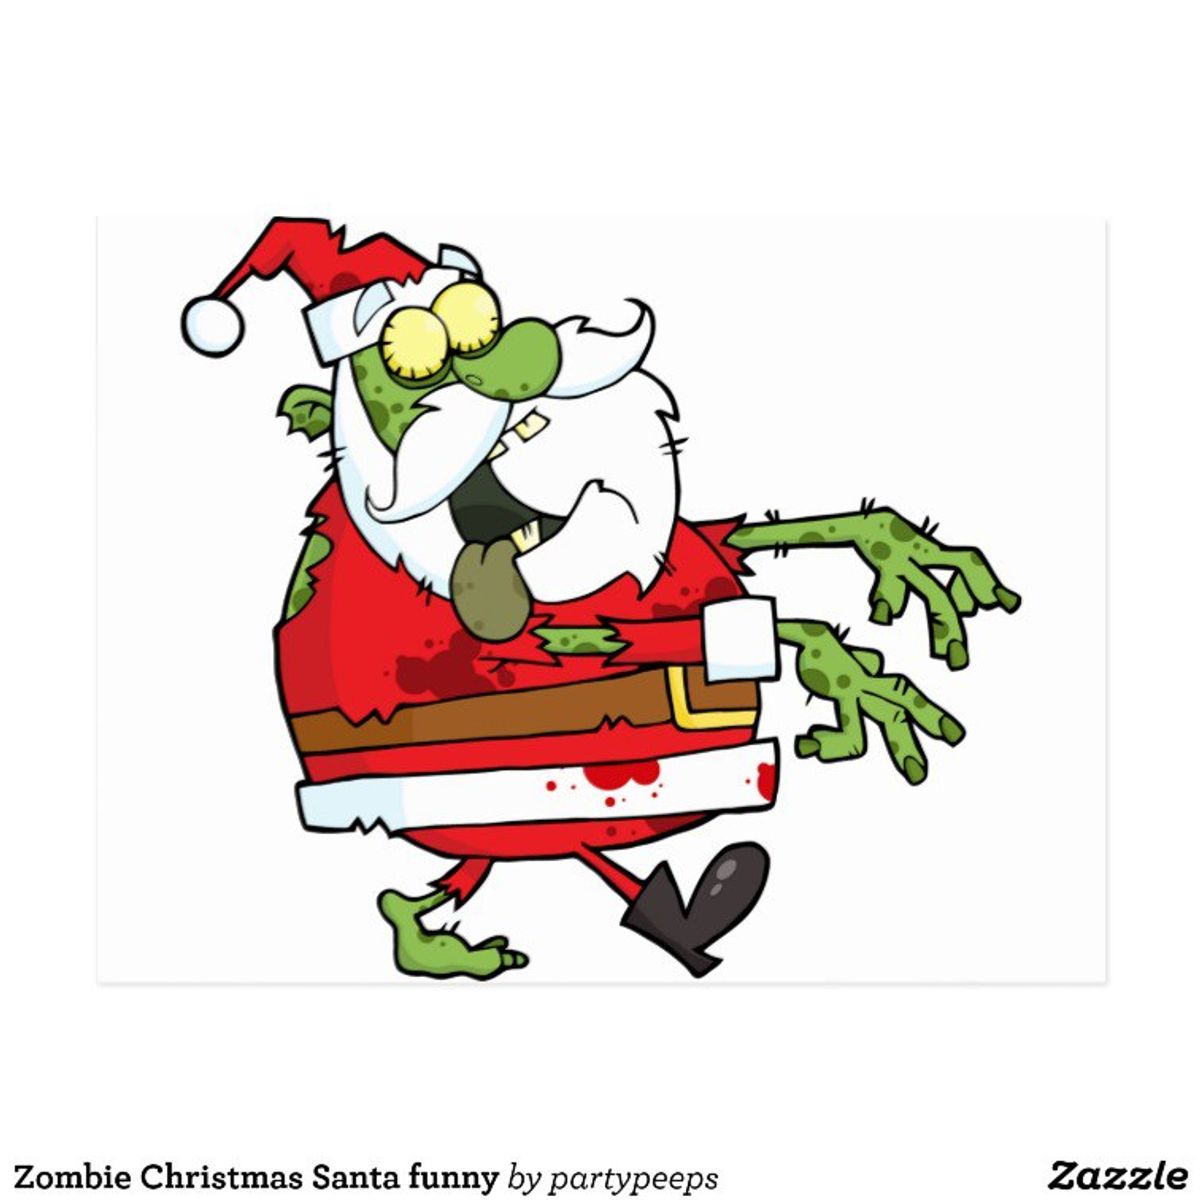 Grocery Worker's Holiday Season Hurdles